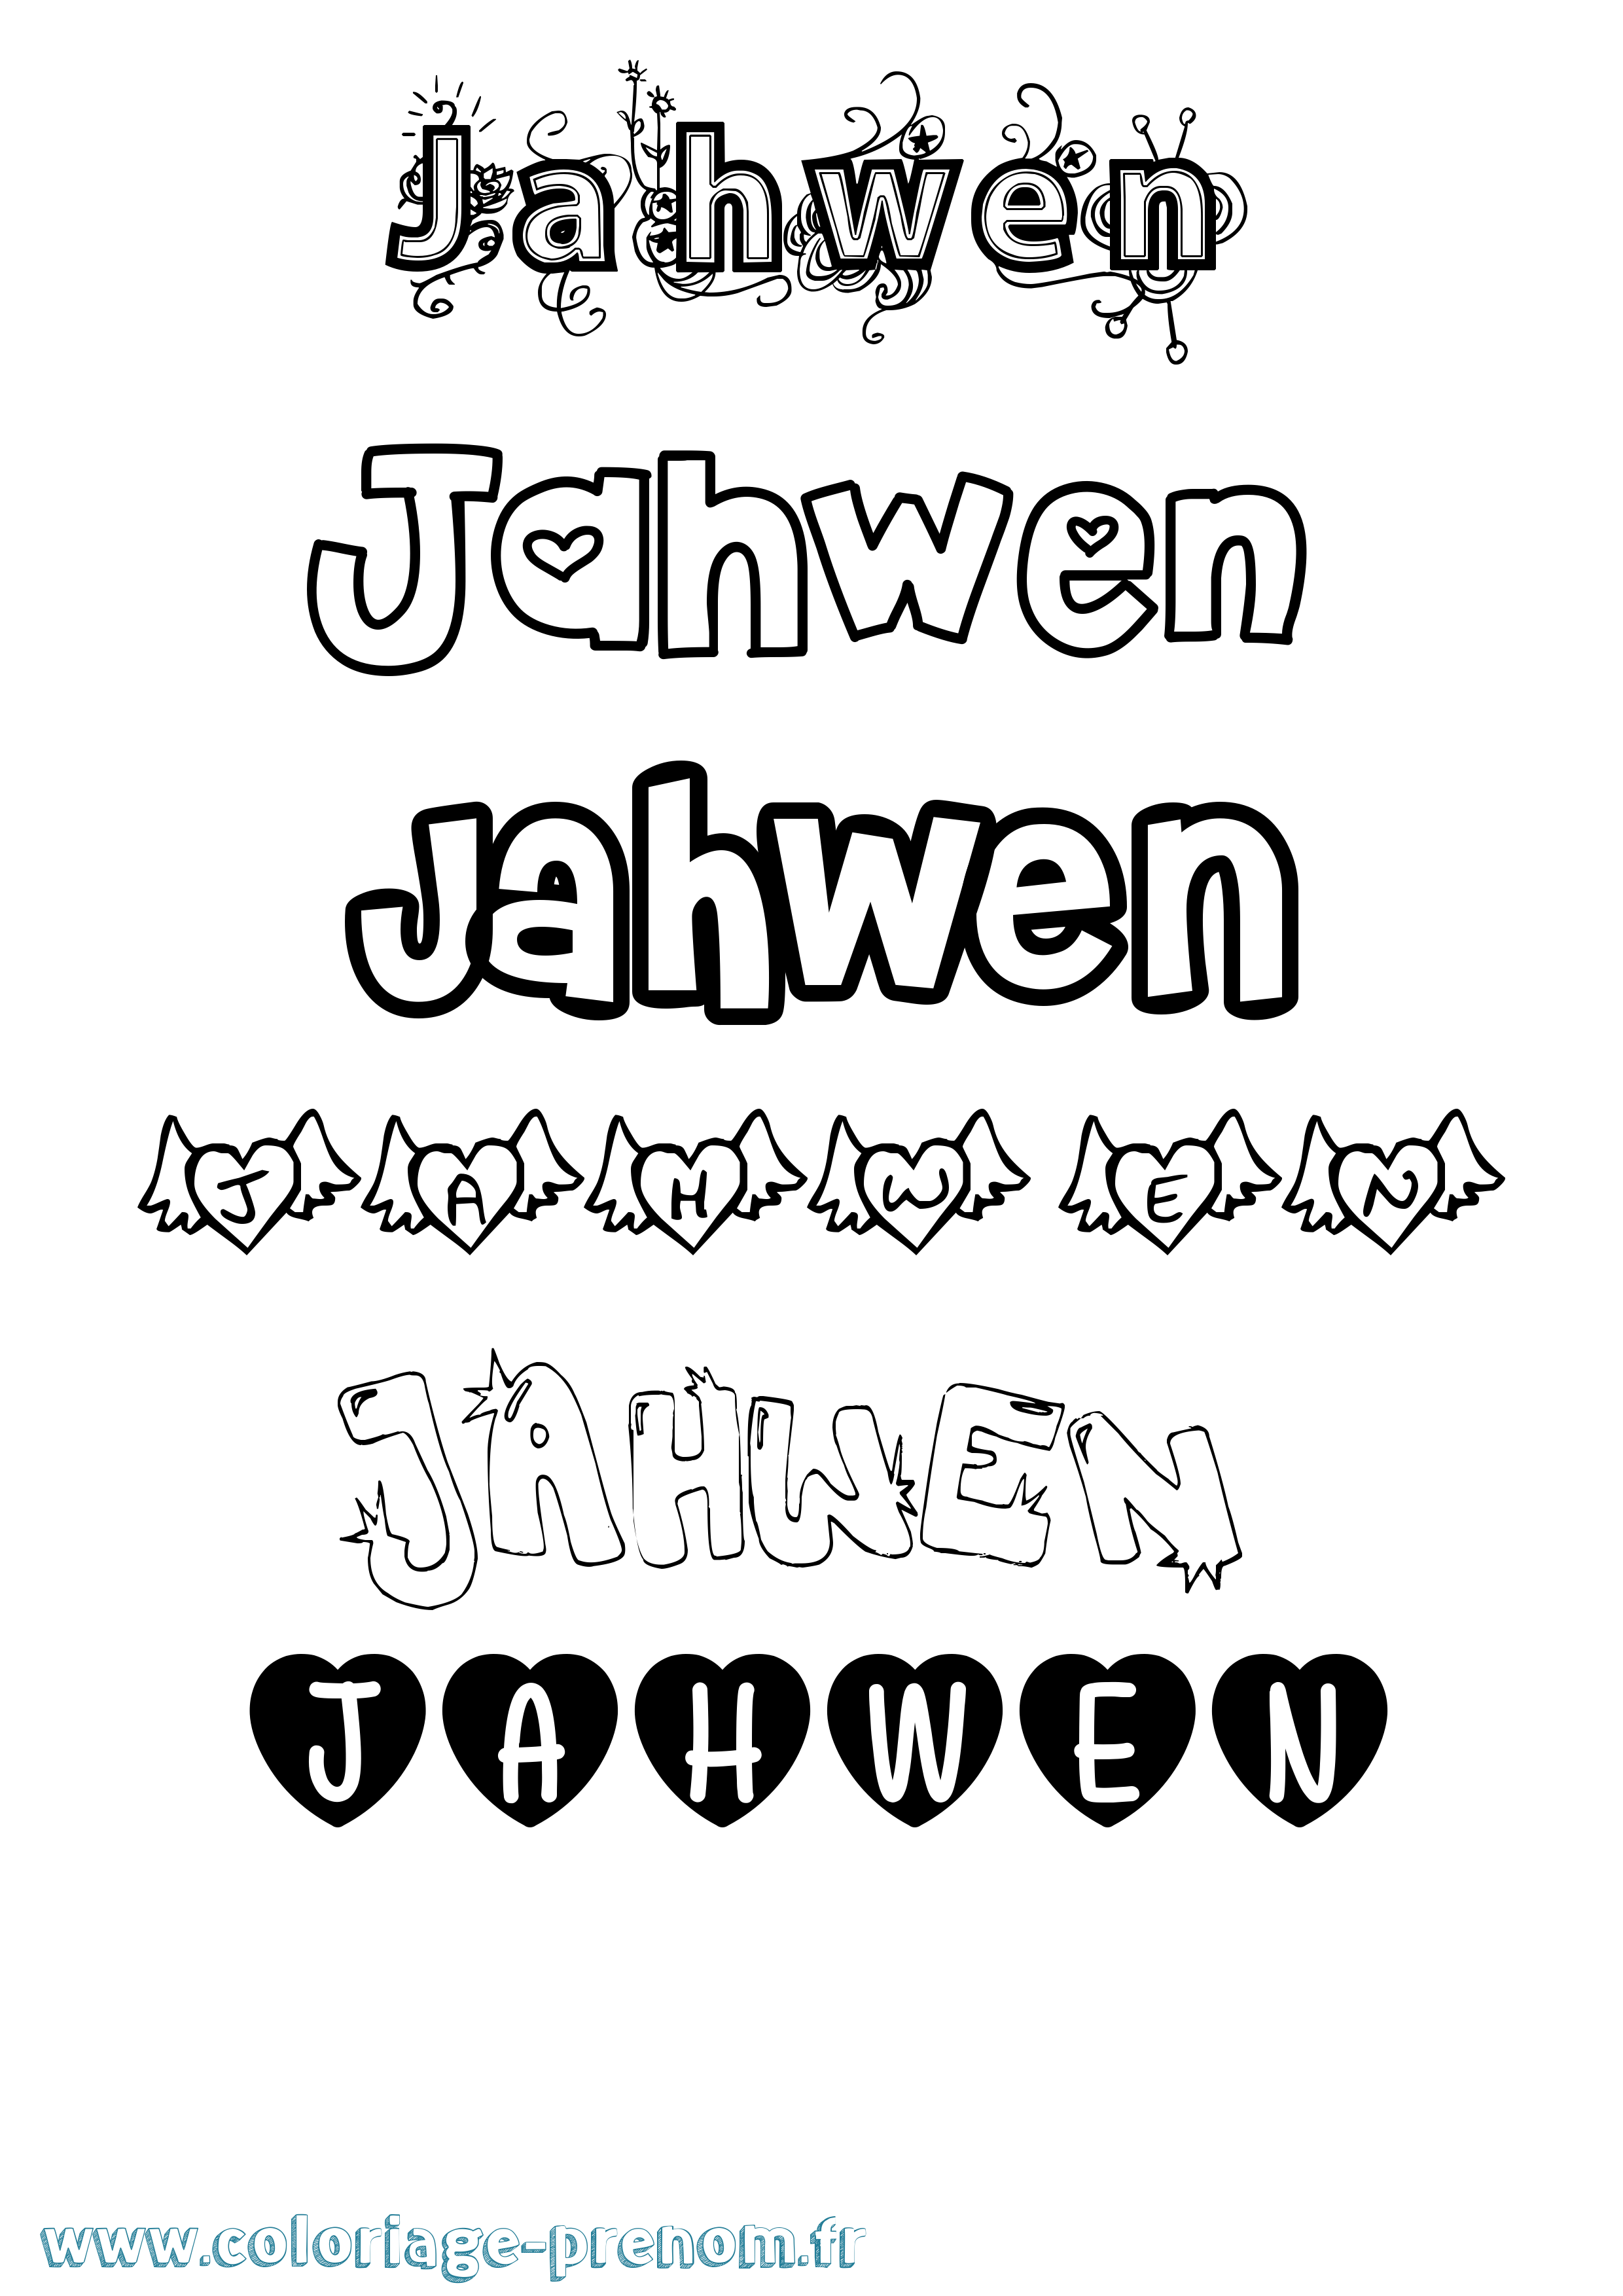 Coloriage prénom Jahwen Girly